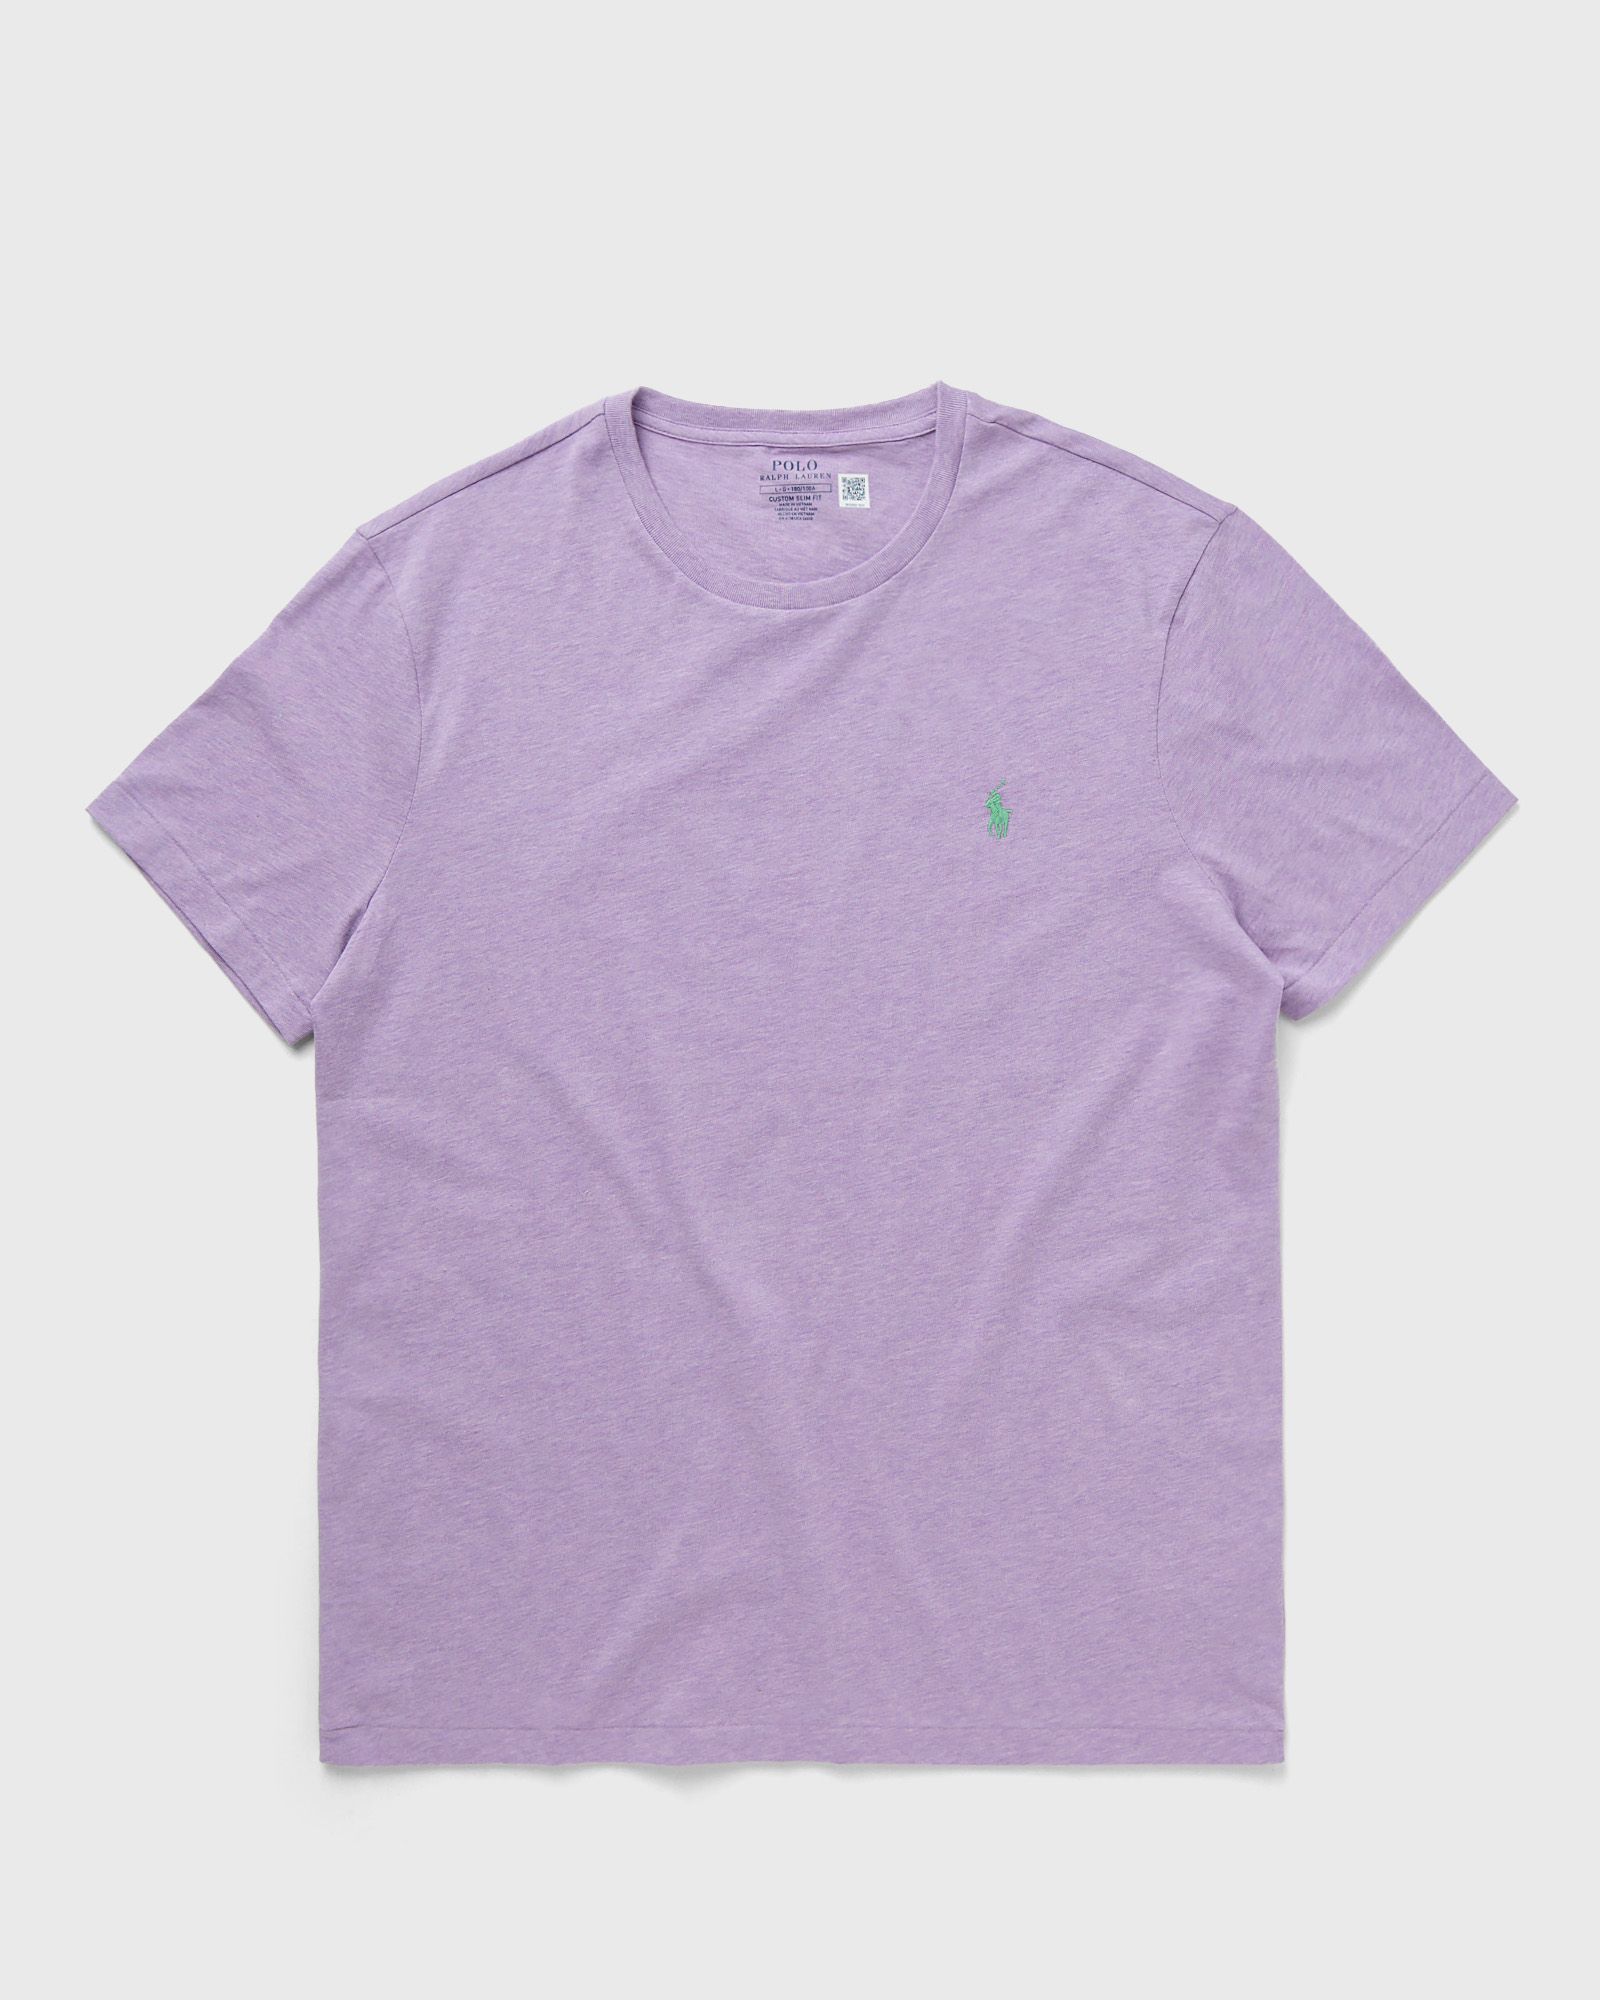 Polo Ralph Lauren - short sleeve-tee men shortsleeves purple in größe:xl